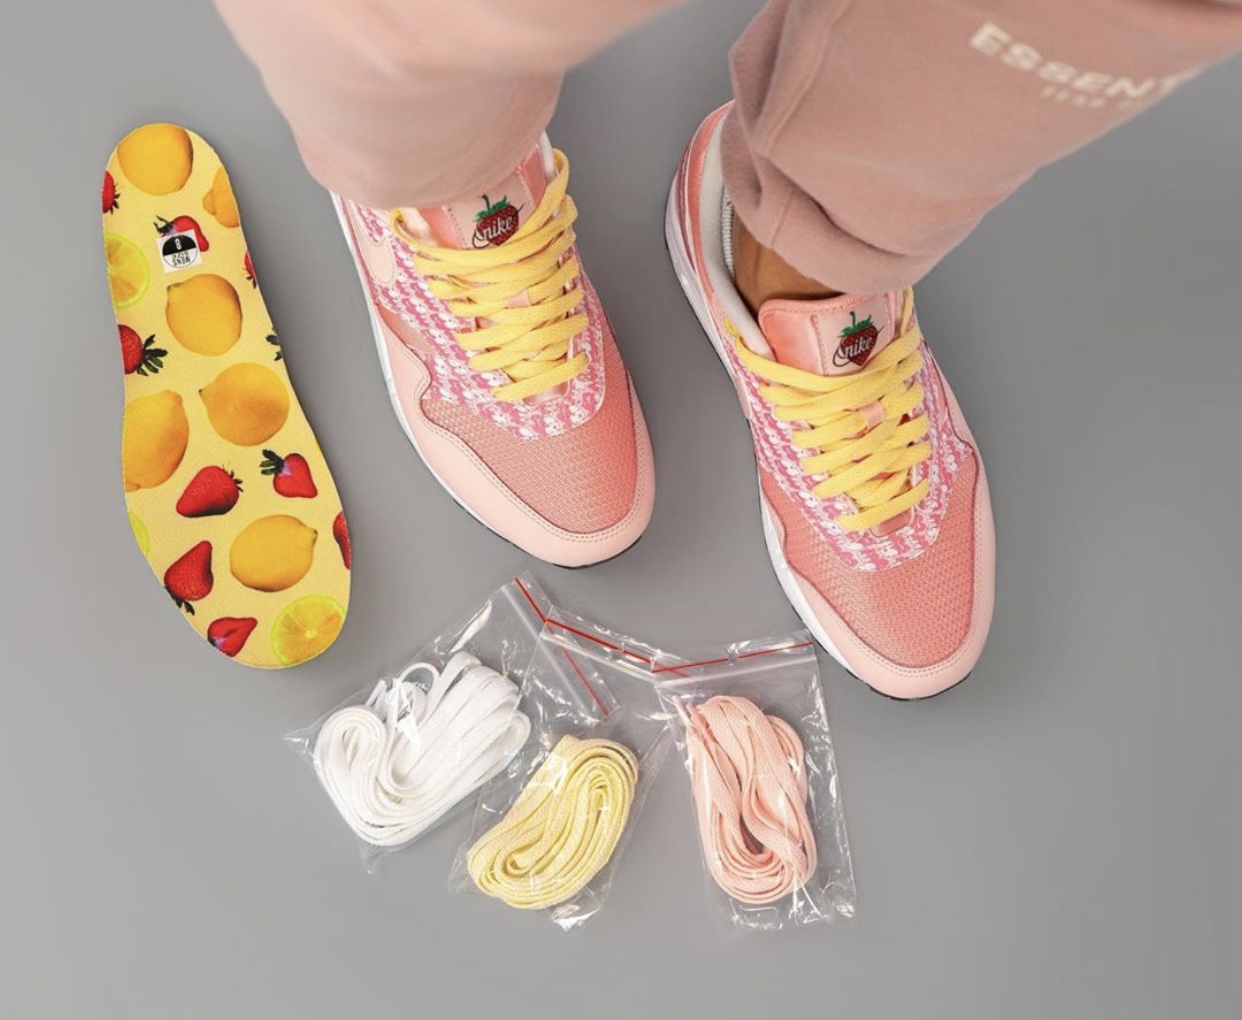 Nike Air Max 1 Strawberry Lemonade CJ0609-600 Release Date On-Feet